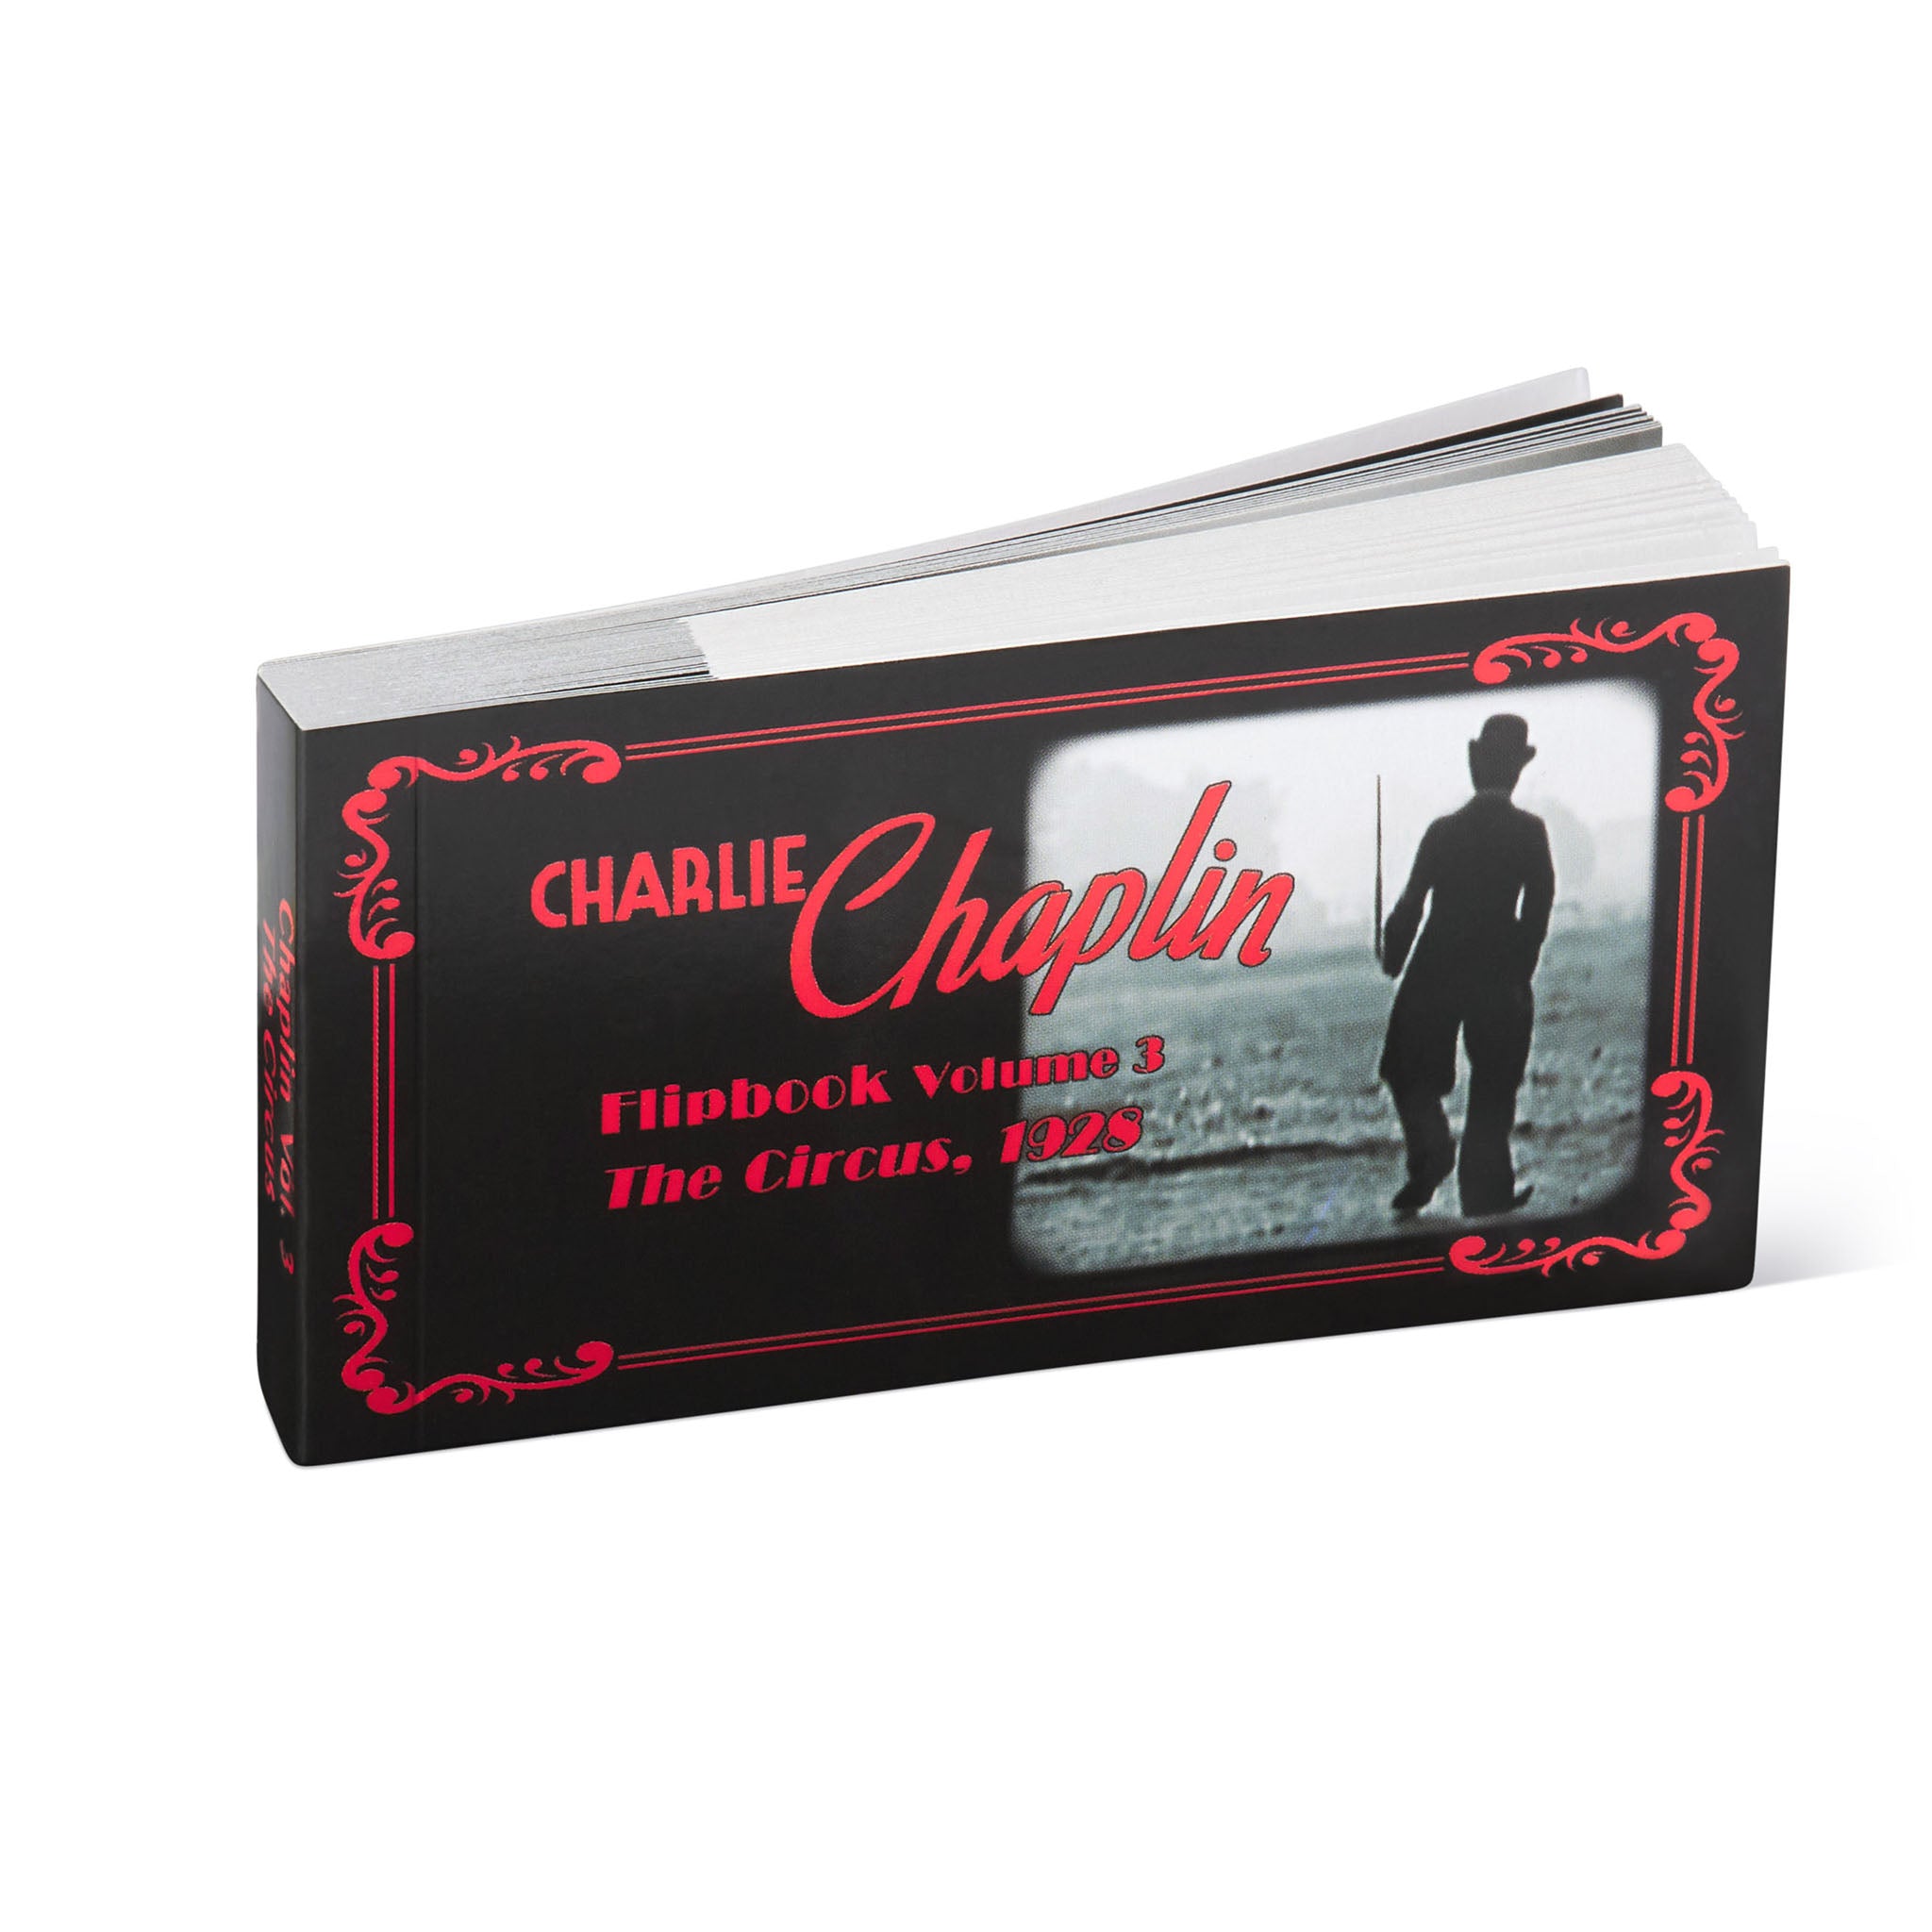 CHARLIE CHAPLIN FLIPBOOK: THE CIRCUS